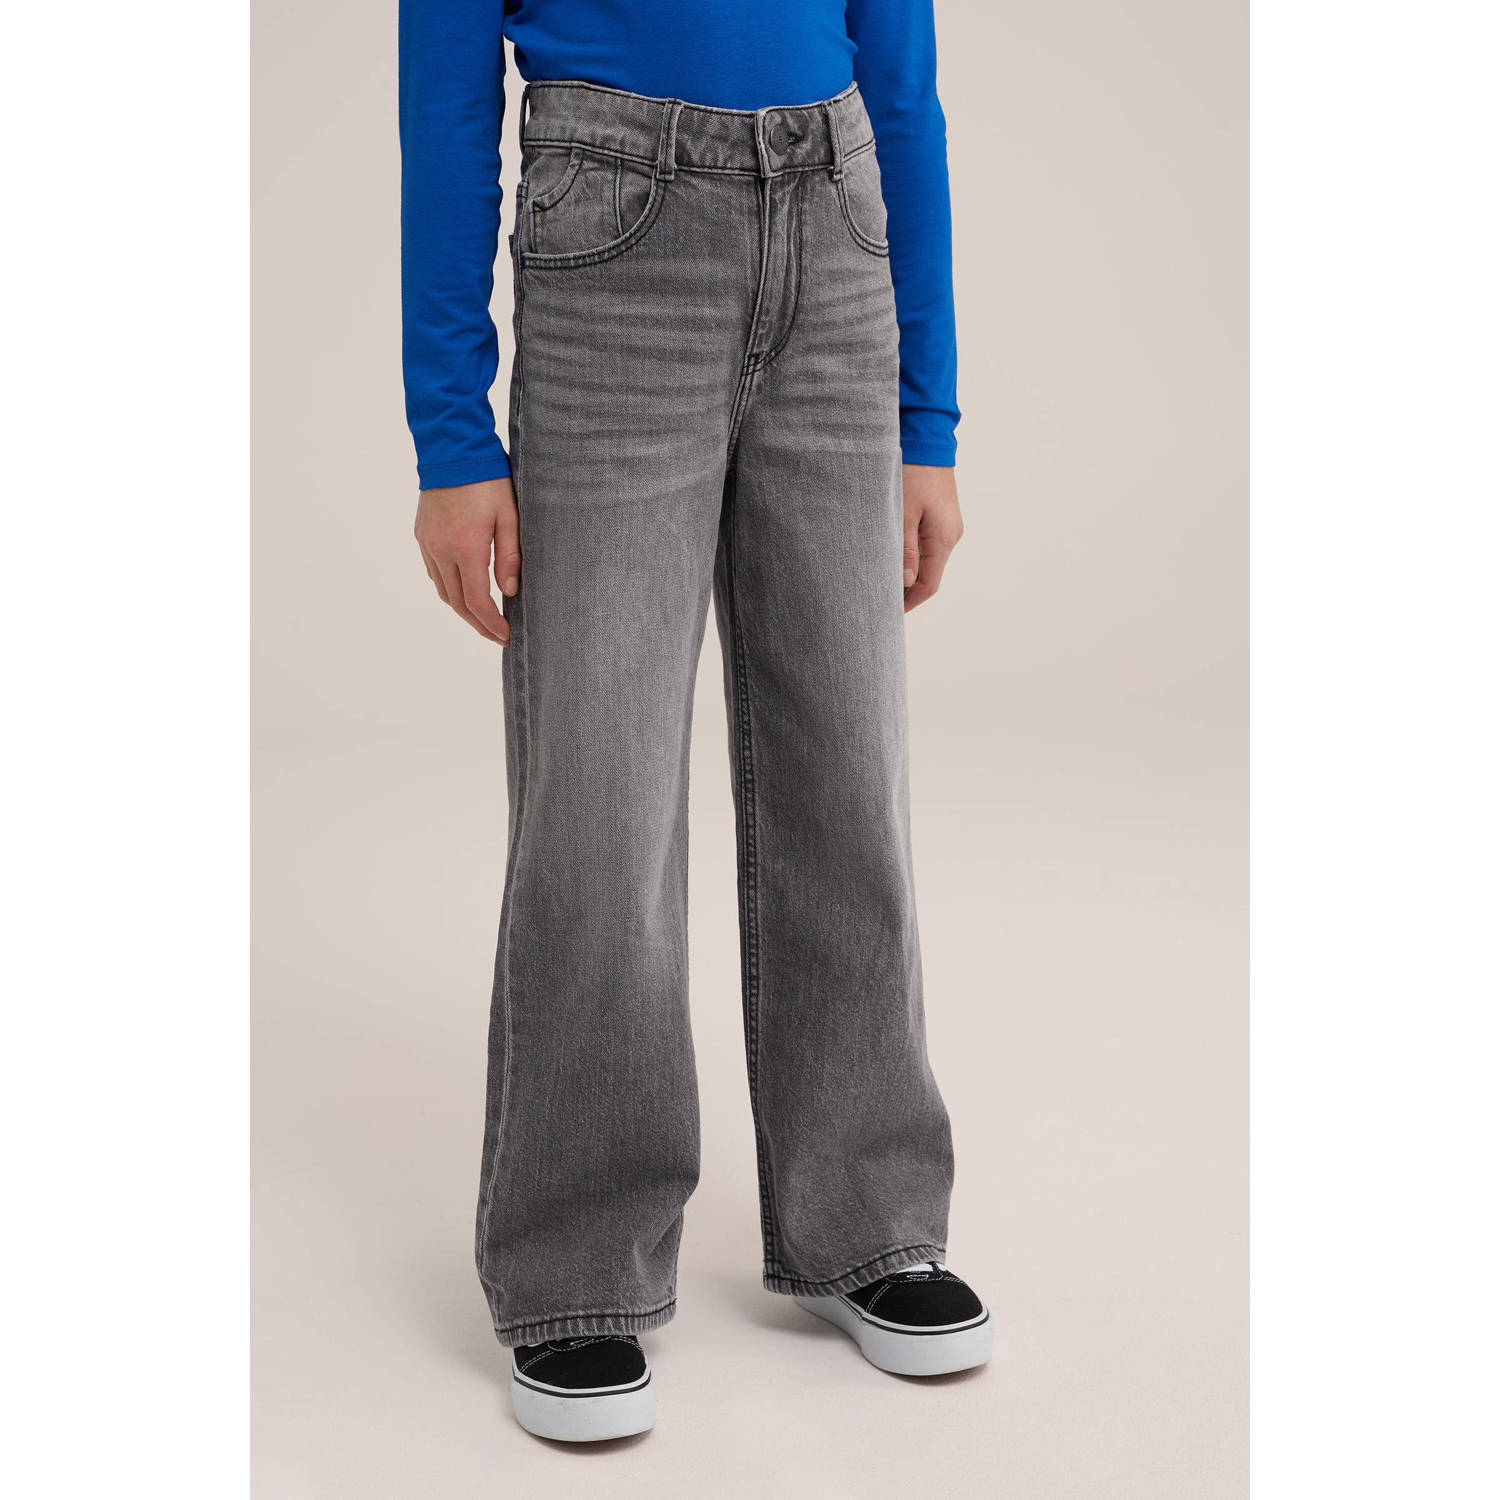 WE Fashion Blue Ridge high waist wide leg jeans grey denim